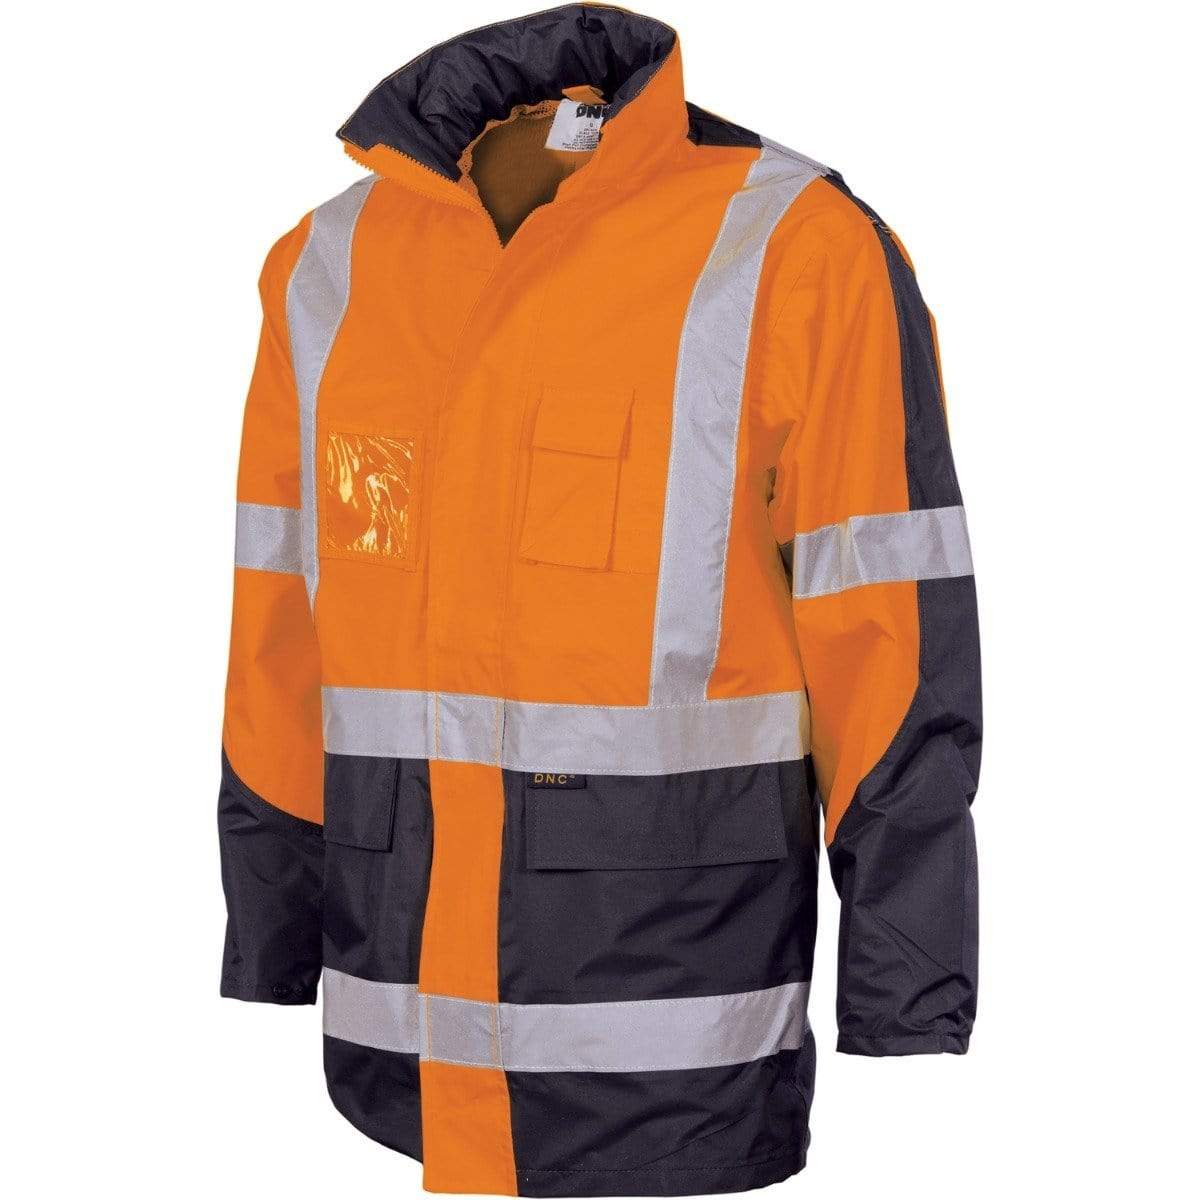 Dnc Workwear Hi-vis 2 Tone Cross Back D/n 2-in-1 Contrast Rain Jacket - 3993 Work Wear DNC Workwear Orange/Navy 5XL 